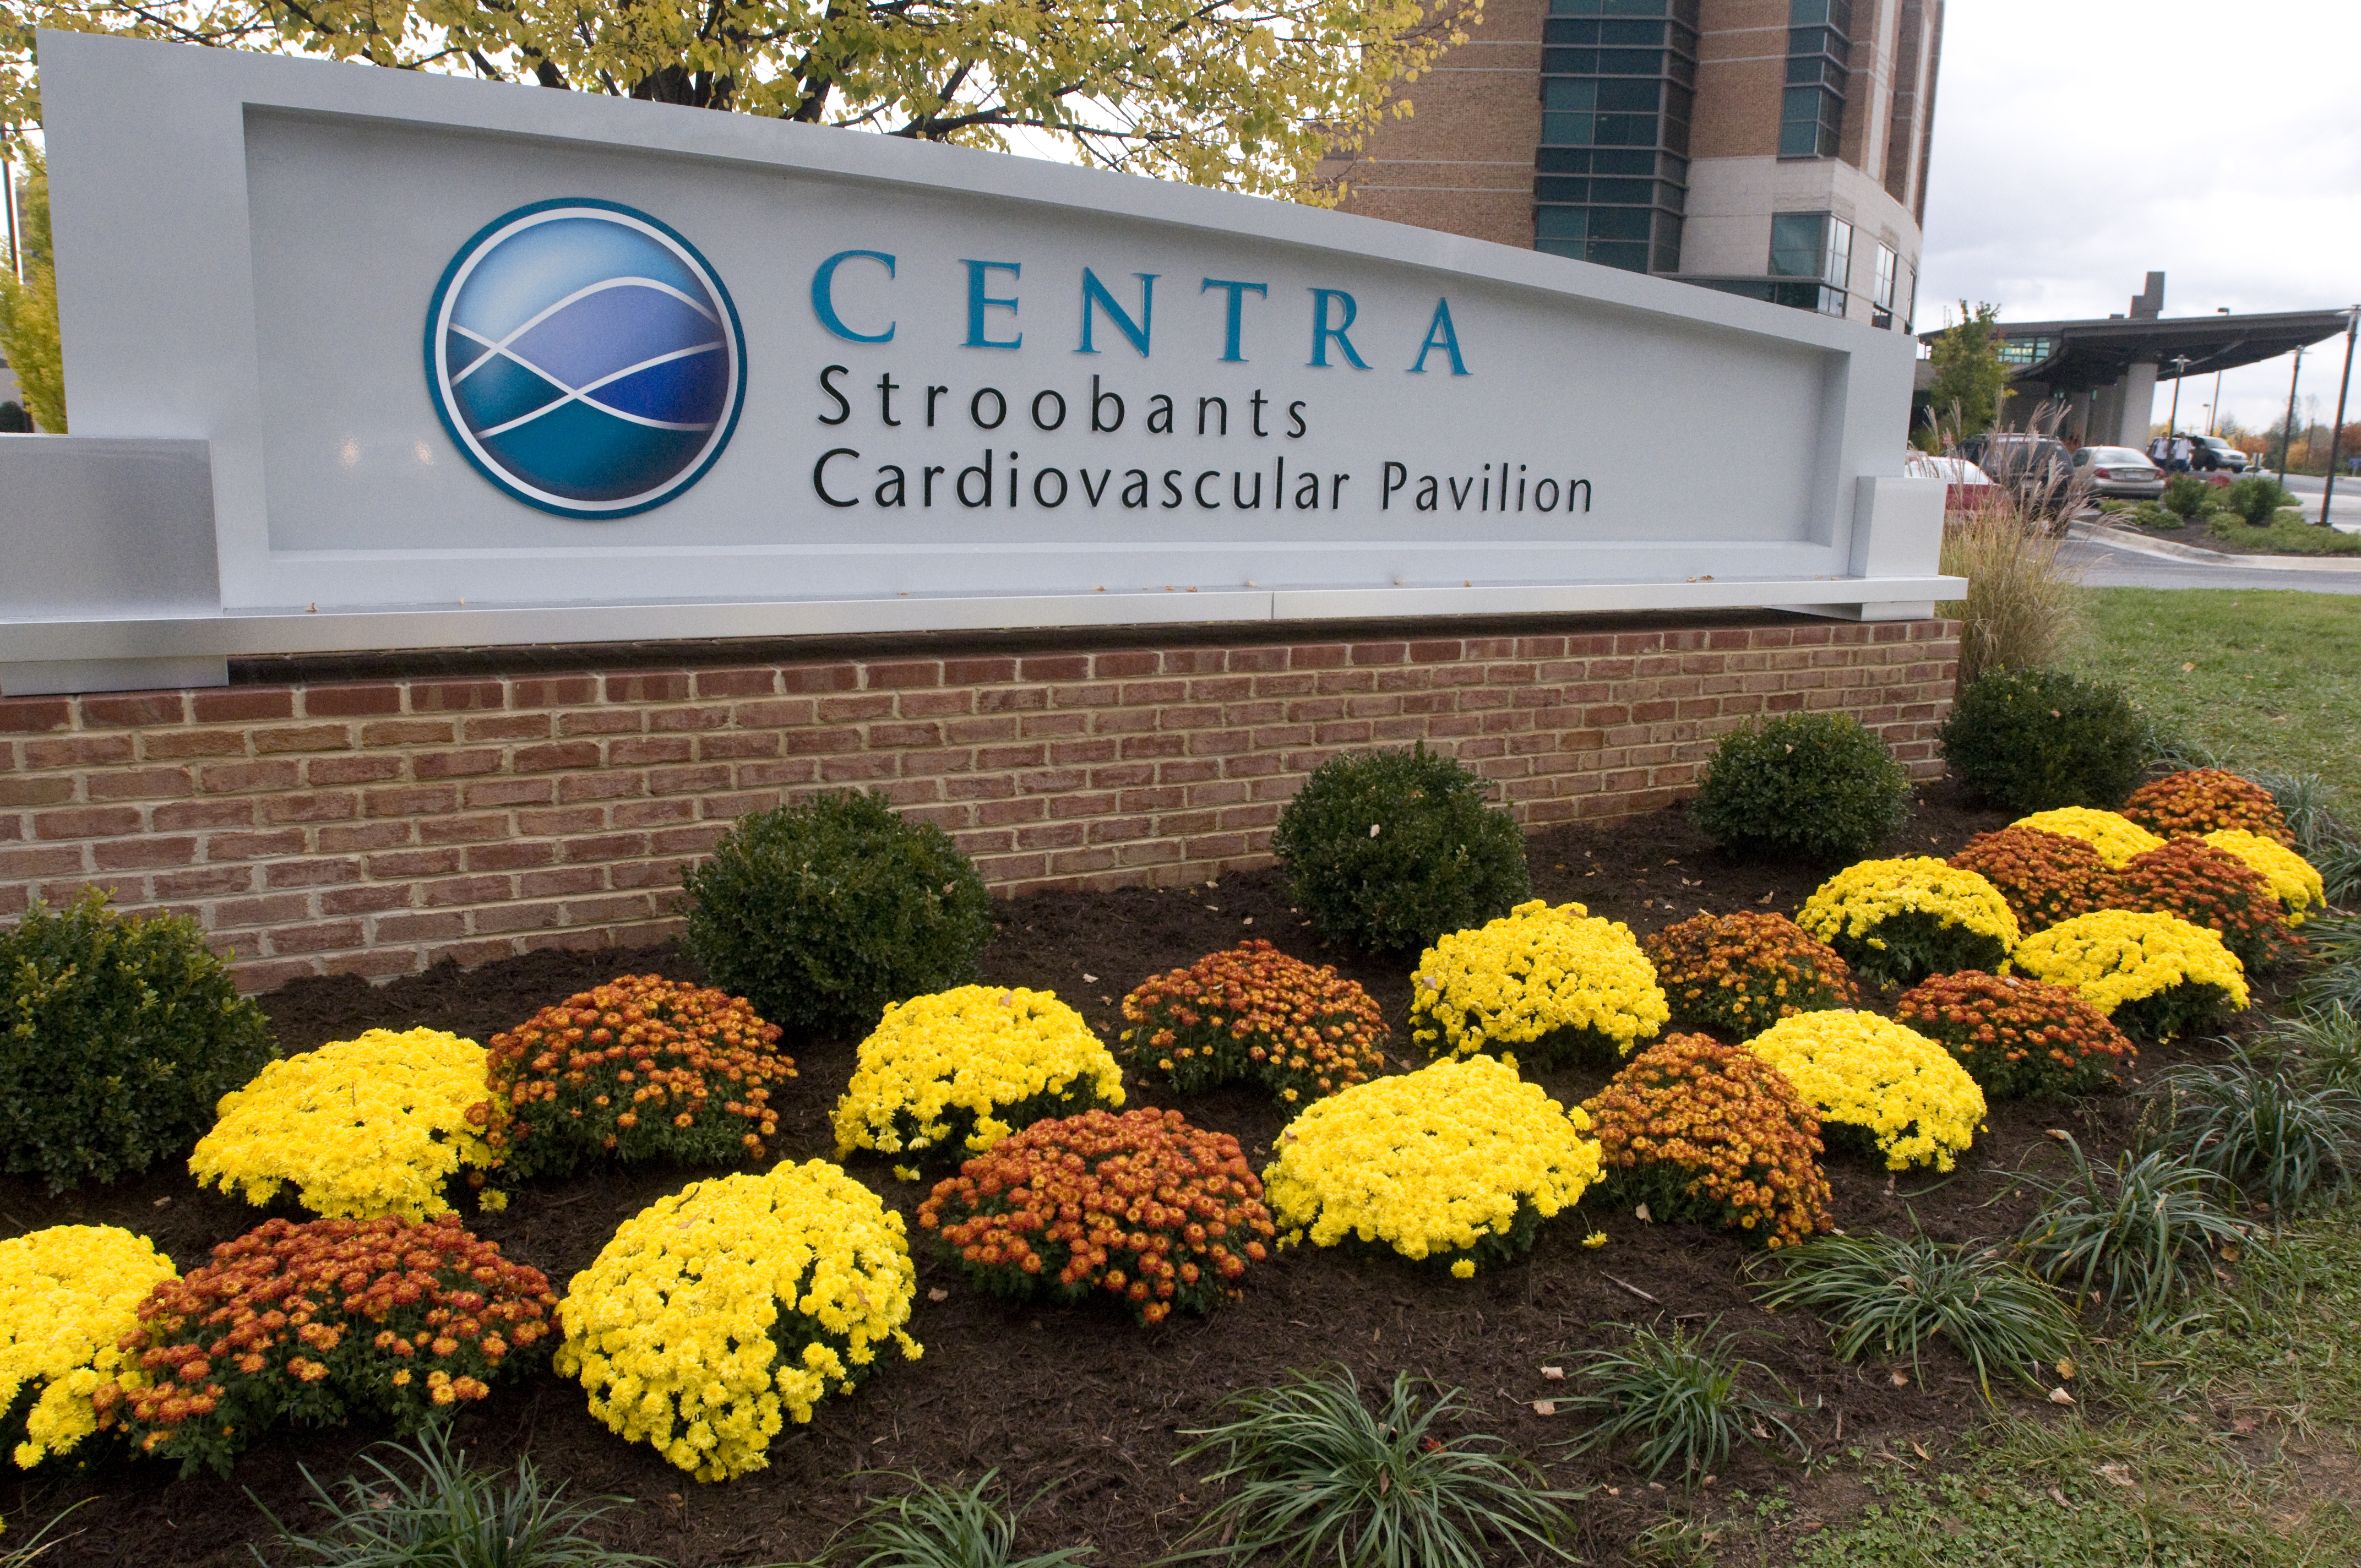 Photo of Centra Heart & Vascular Institute - Stroobants Cardiovascular Pavilion